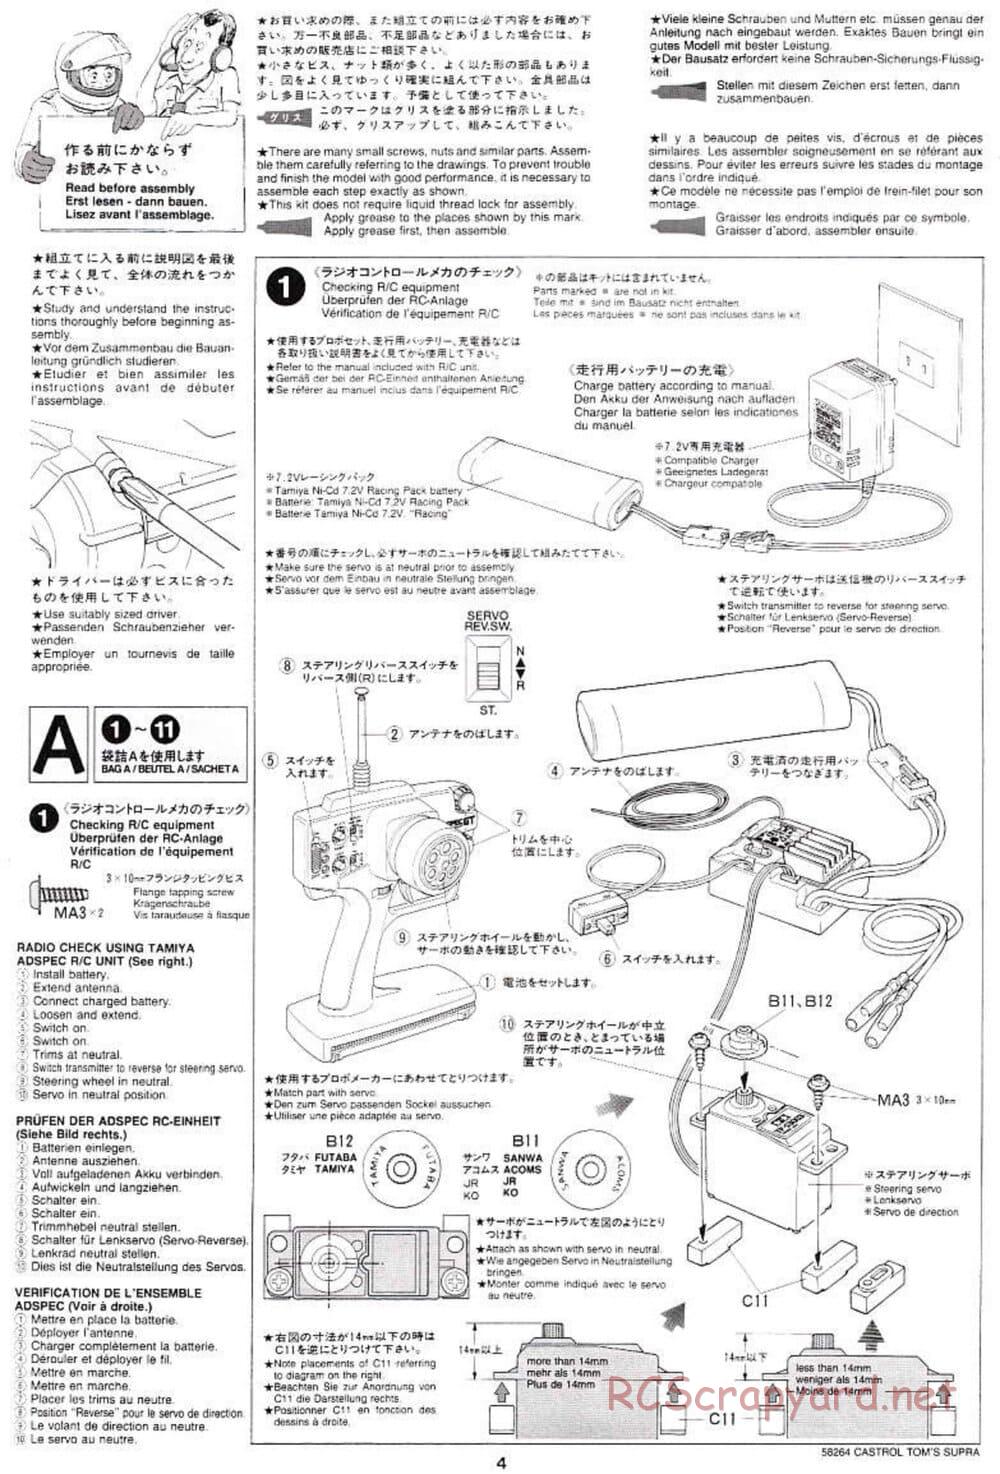 Tamiya - Castrol Tom's Supra 2000 - TL-01 Chassis - Manual - Page 4